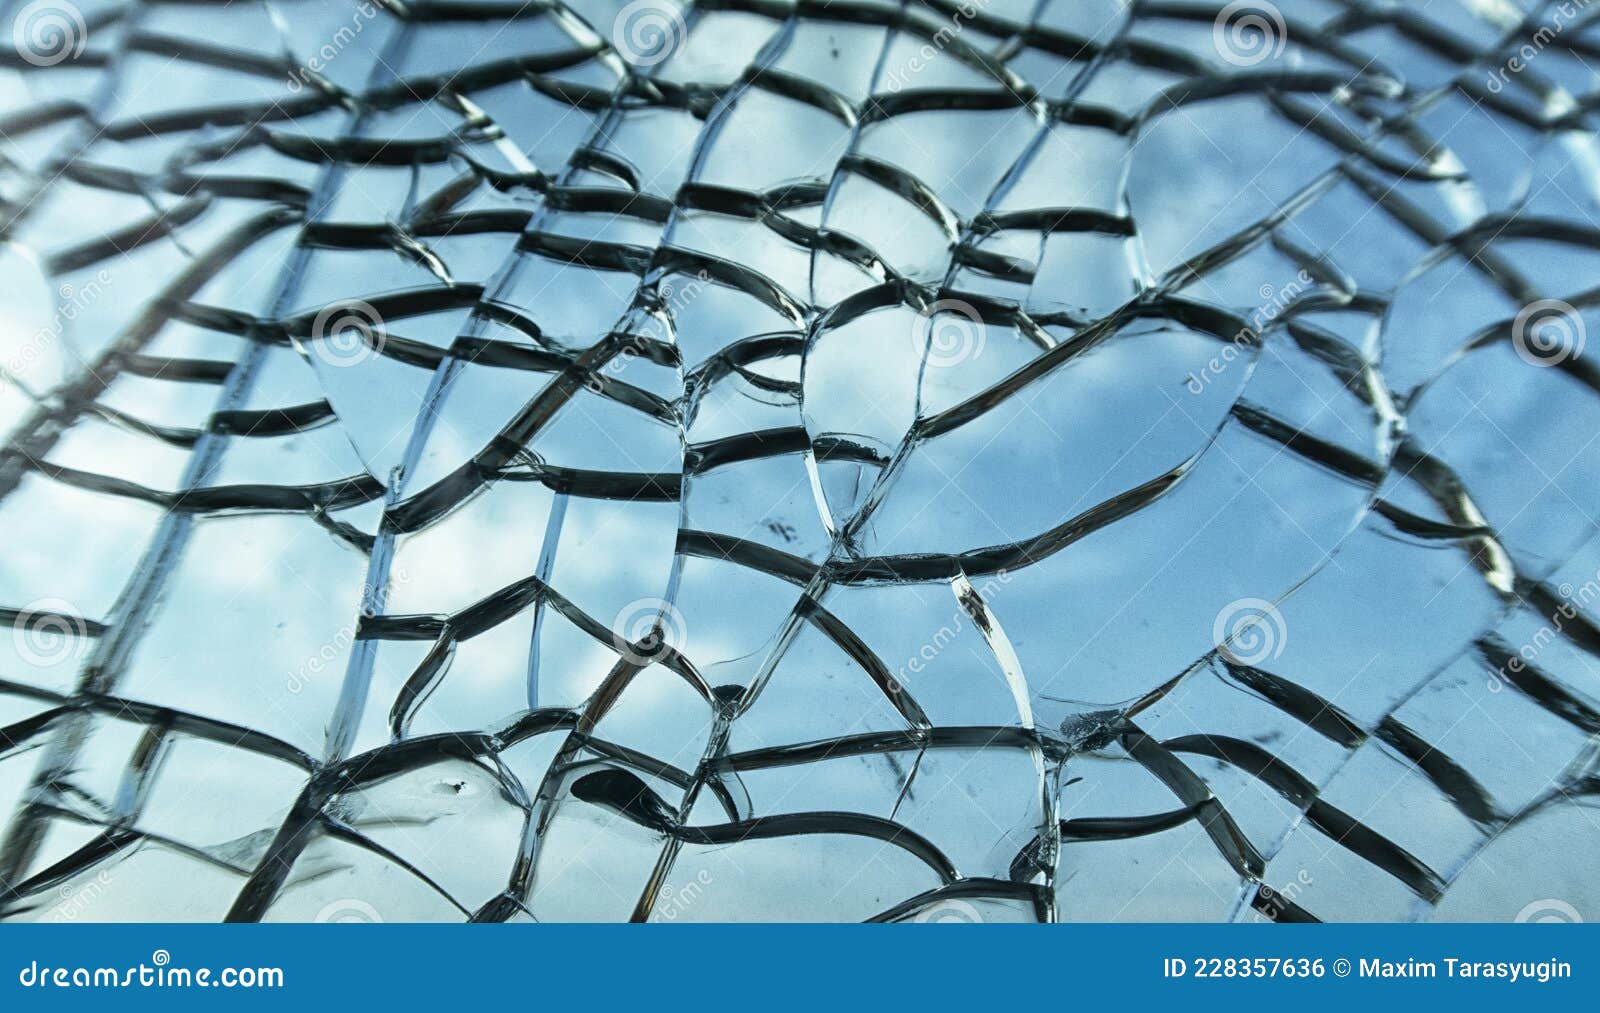 Storing Ga trouwen plek Large Shattered Tempered Glass Window Pane. Cracked Glass Texture Close Up.  Stock Photo - Image of break, destruction: 228357636